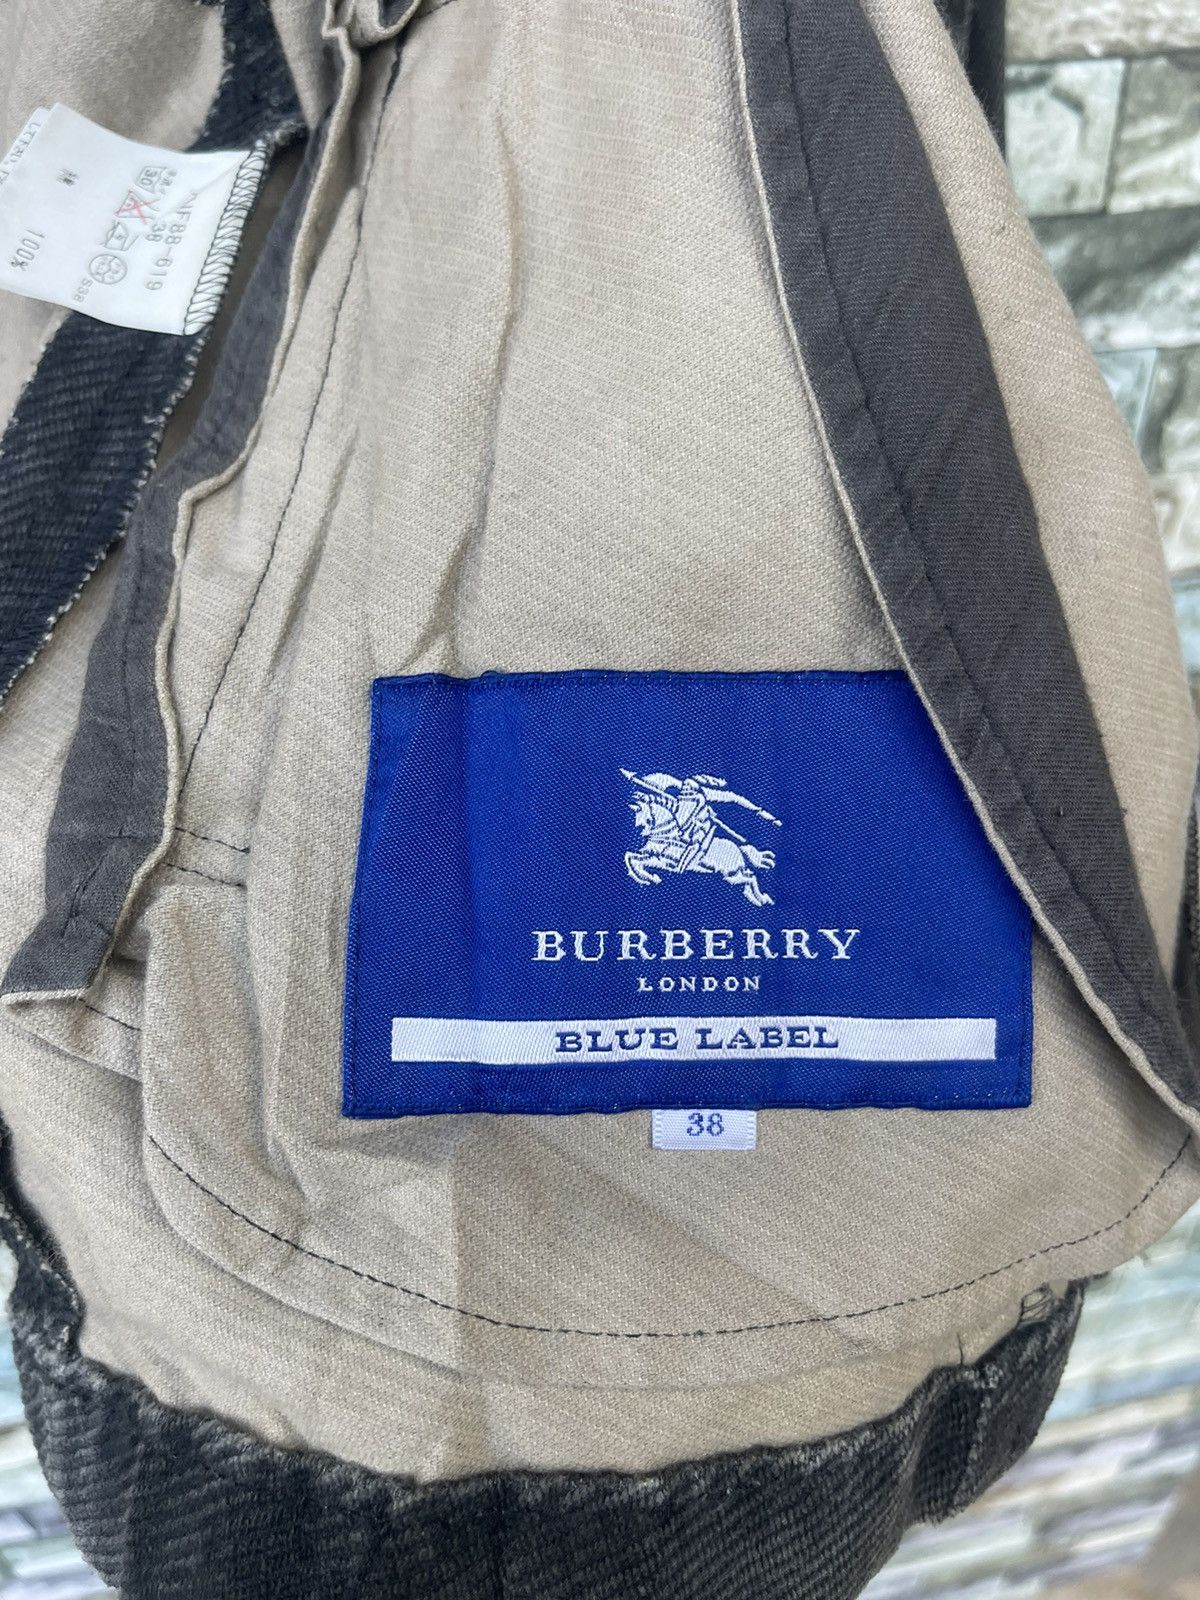 Burberry London Blue Label Denim Jacket - 3